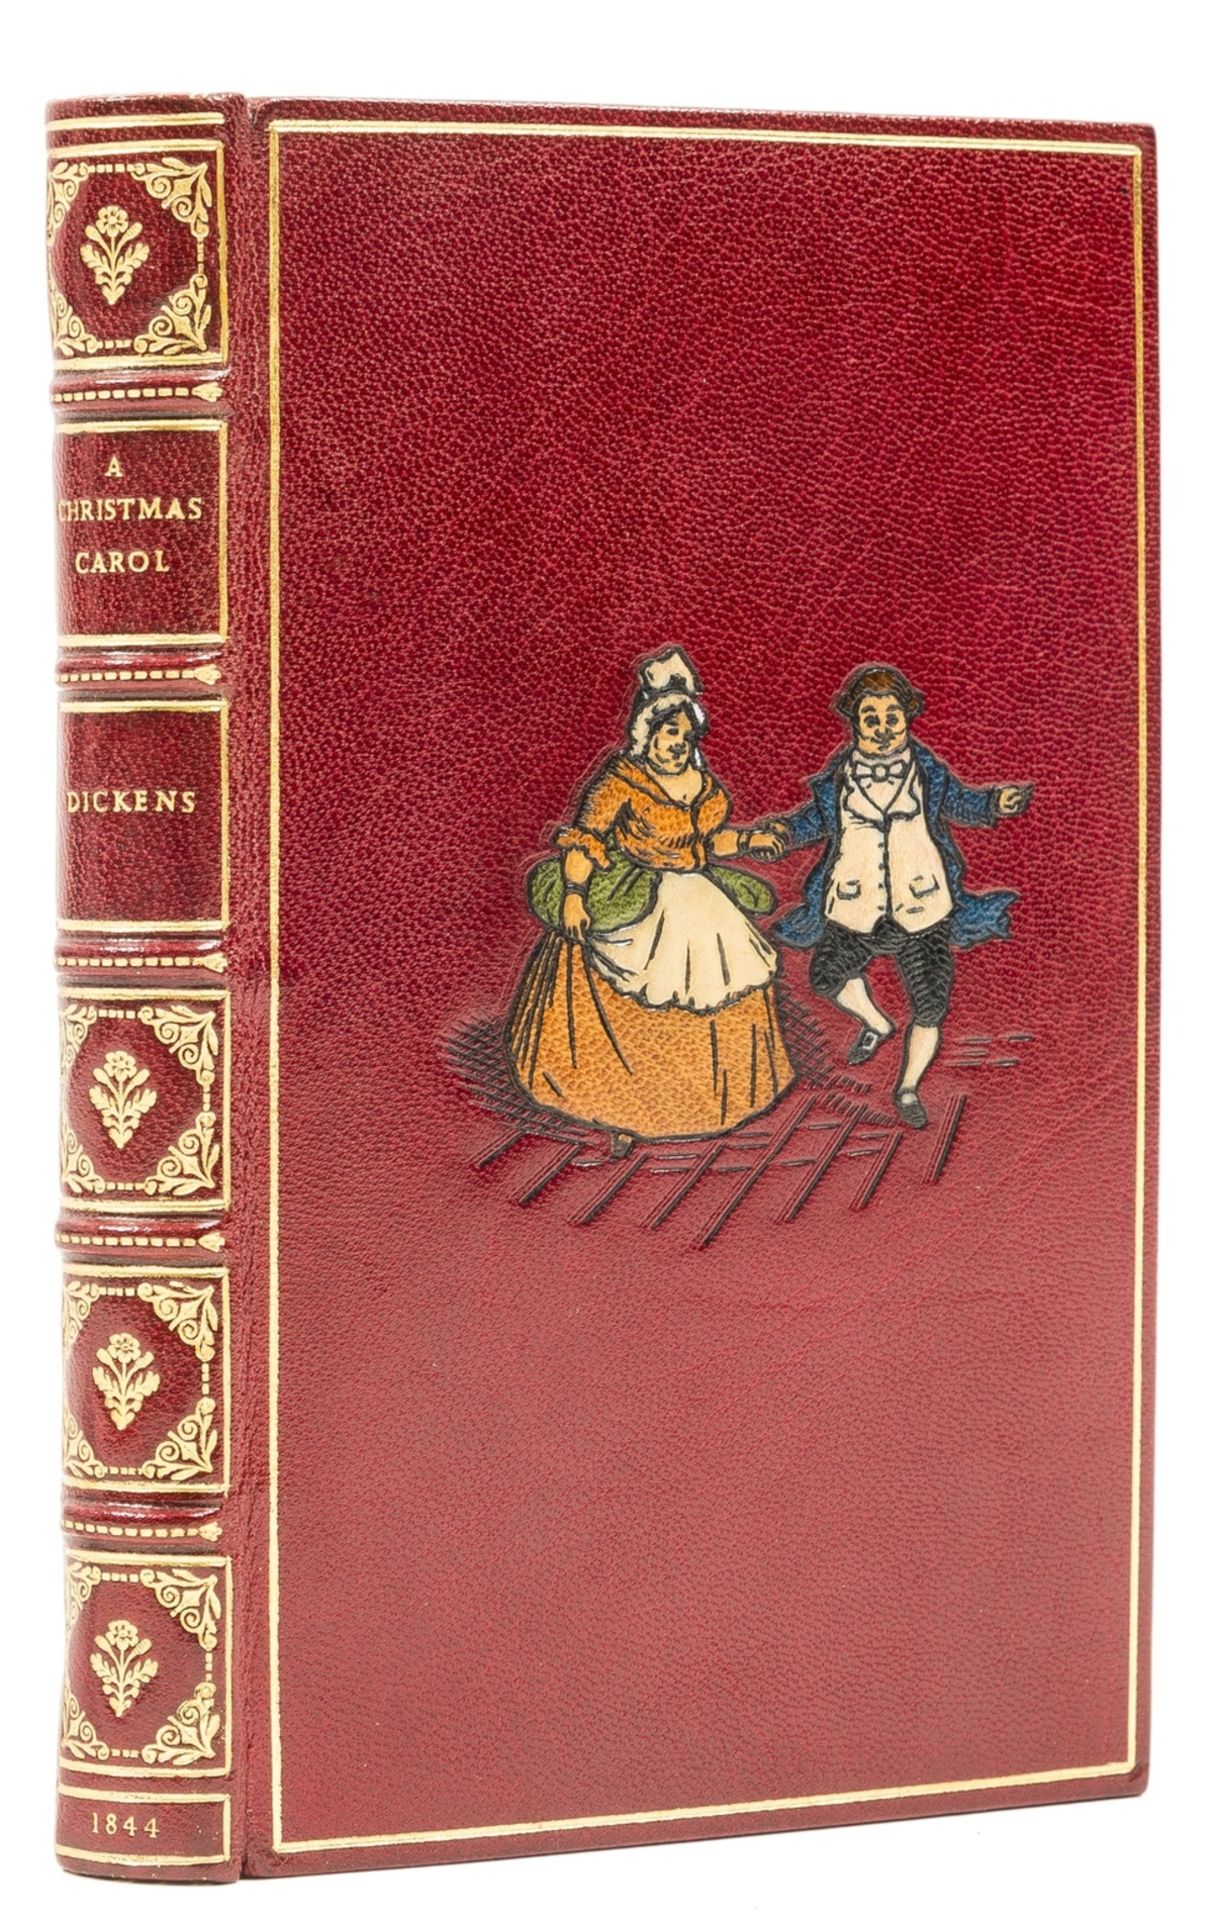 Dickens (Charles) A Christmas Carol, ninth edition, 1844.